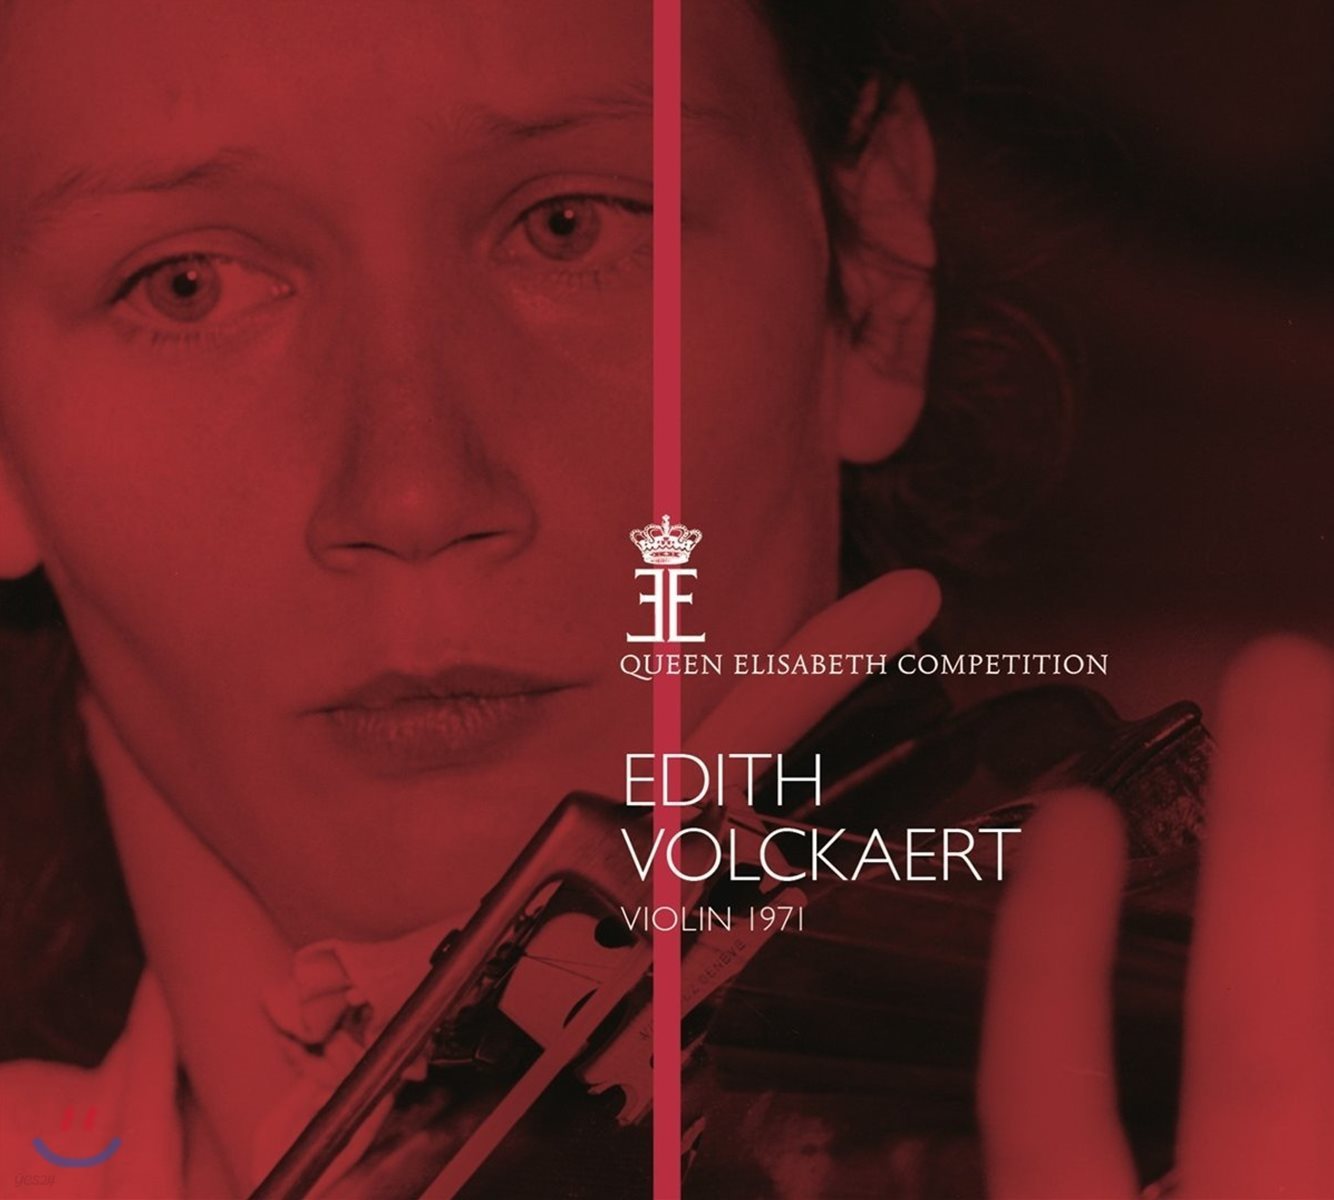 Edith Volckaert 에디트 볼케르트 - 퀸 엘리자베스 콩쿠르 1971년 실황 (Queen Elisabeth Competition - Violin 1971)